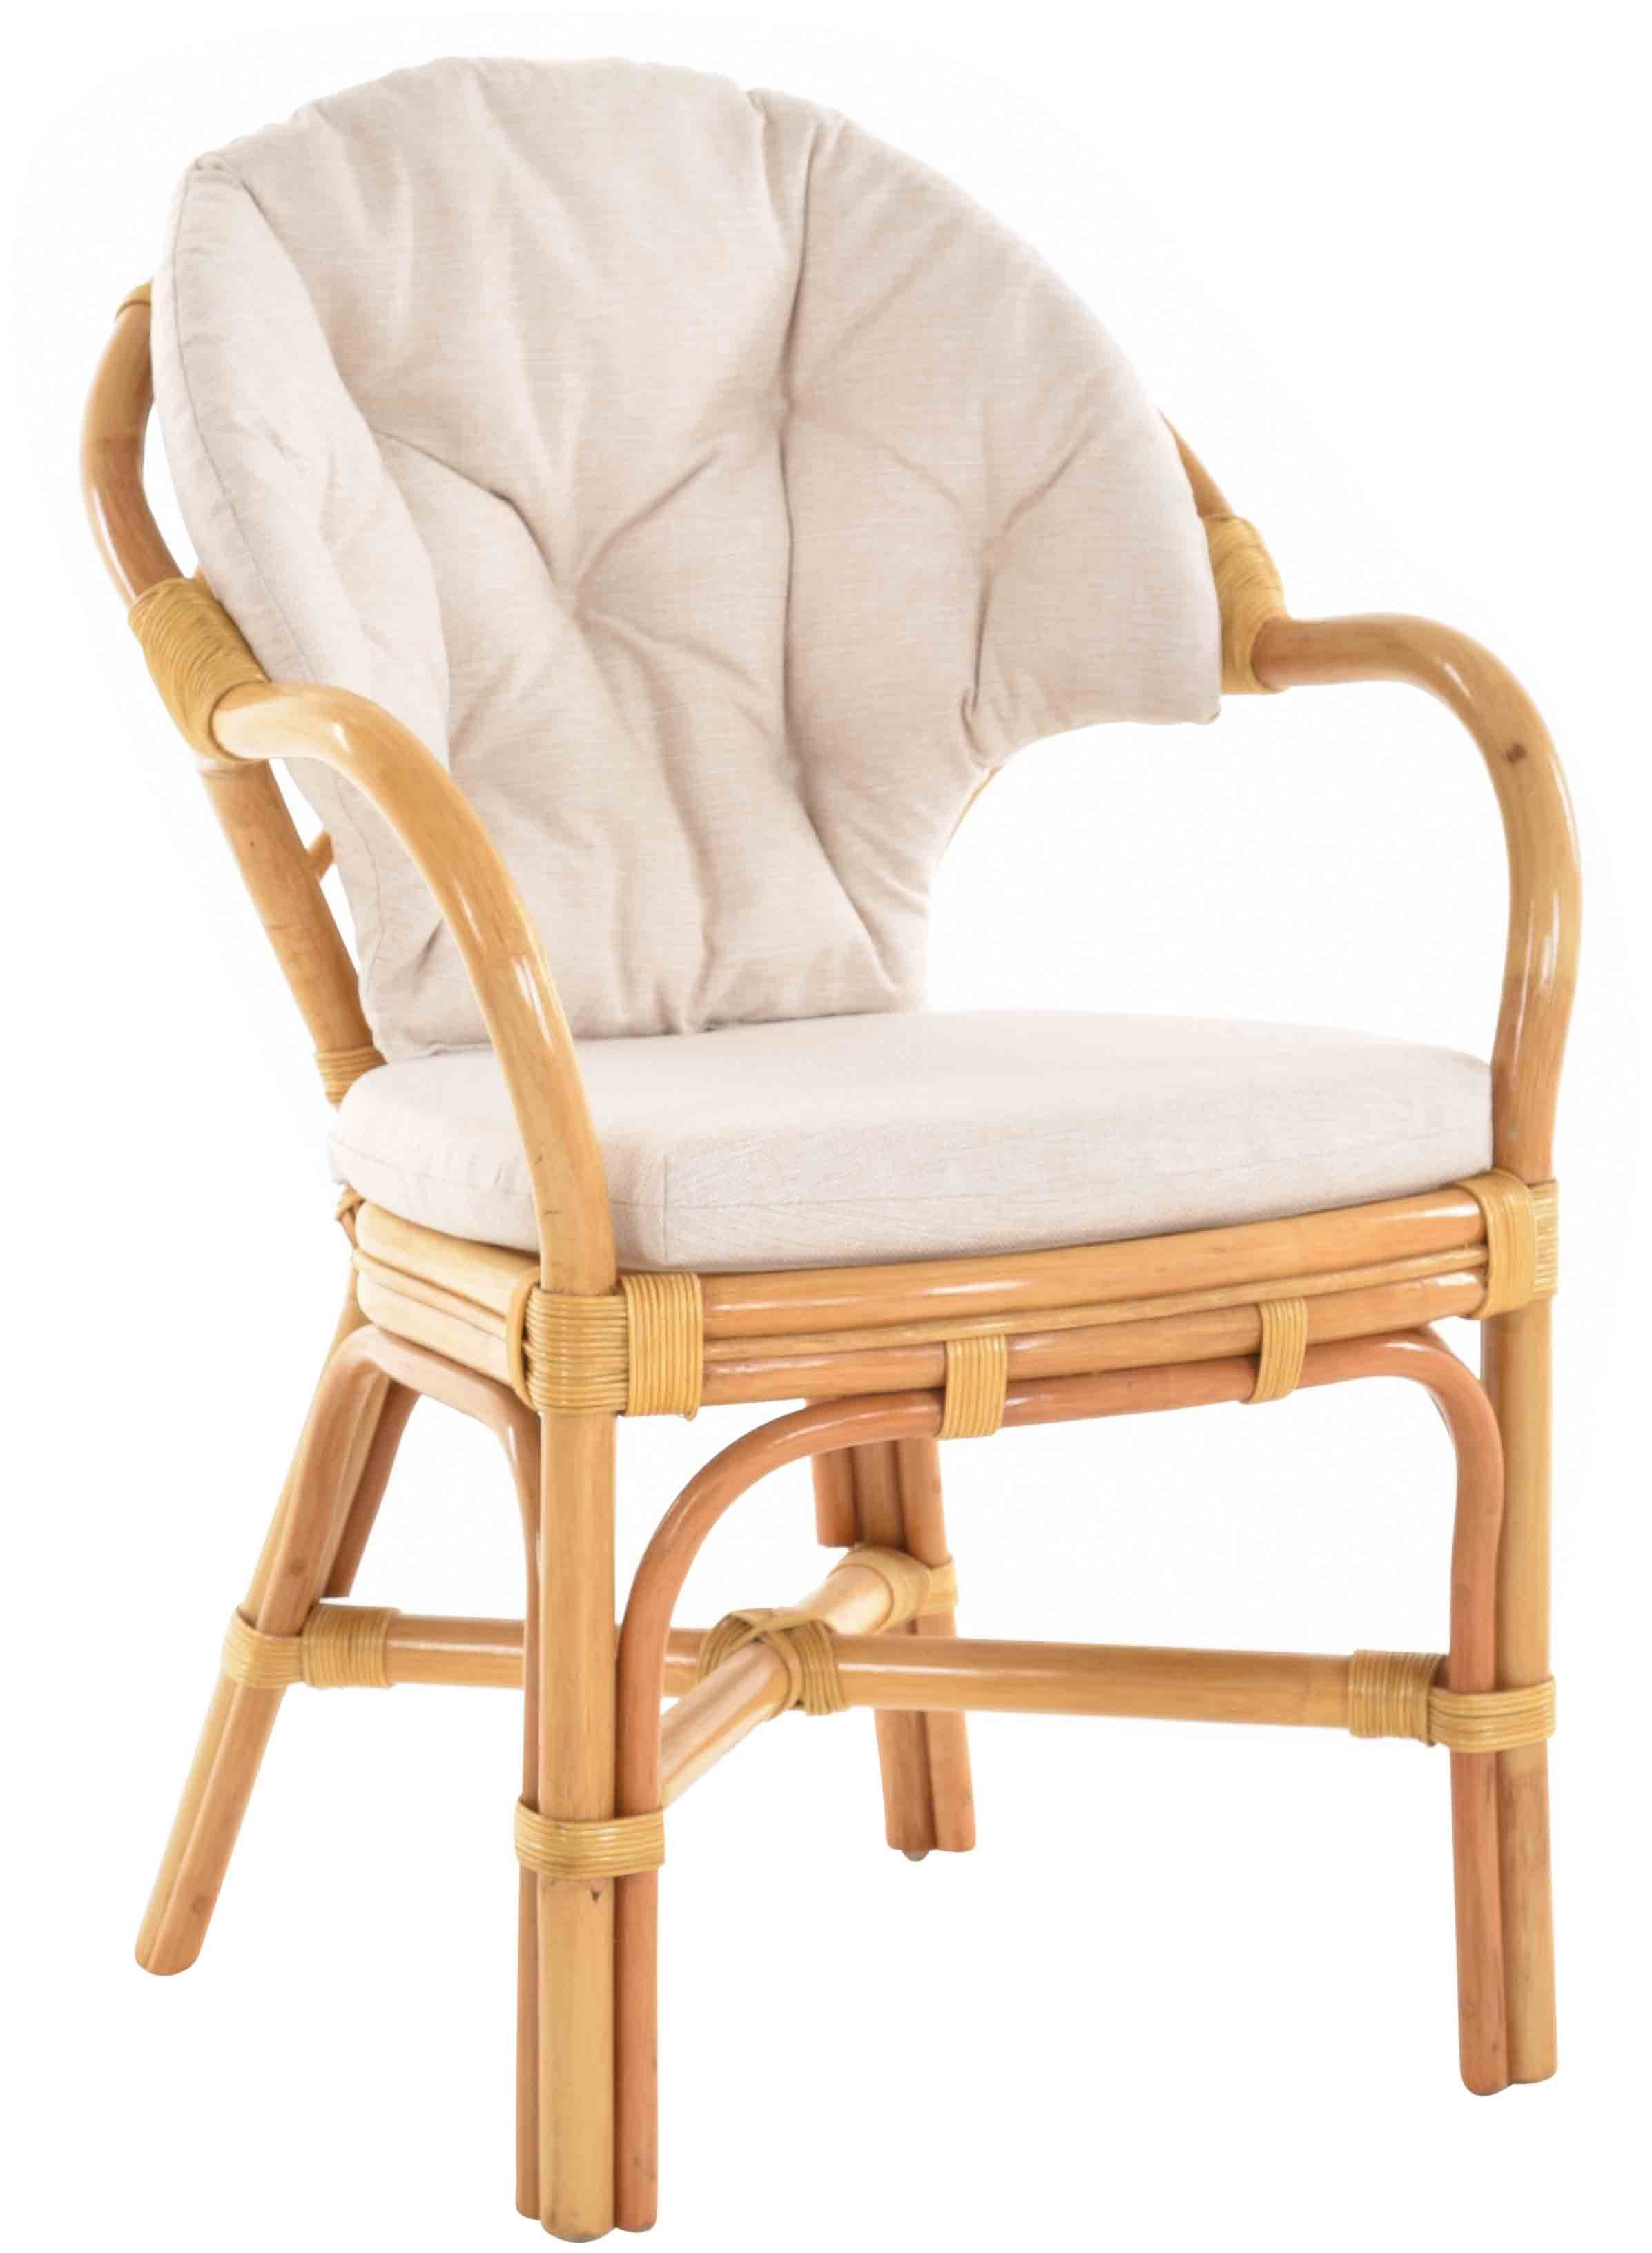 Rattan Sessel Möbel NEU in der Farbe honig Stuhl Korbsessel stapelbar 